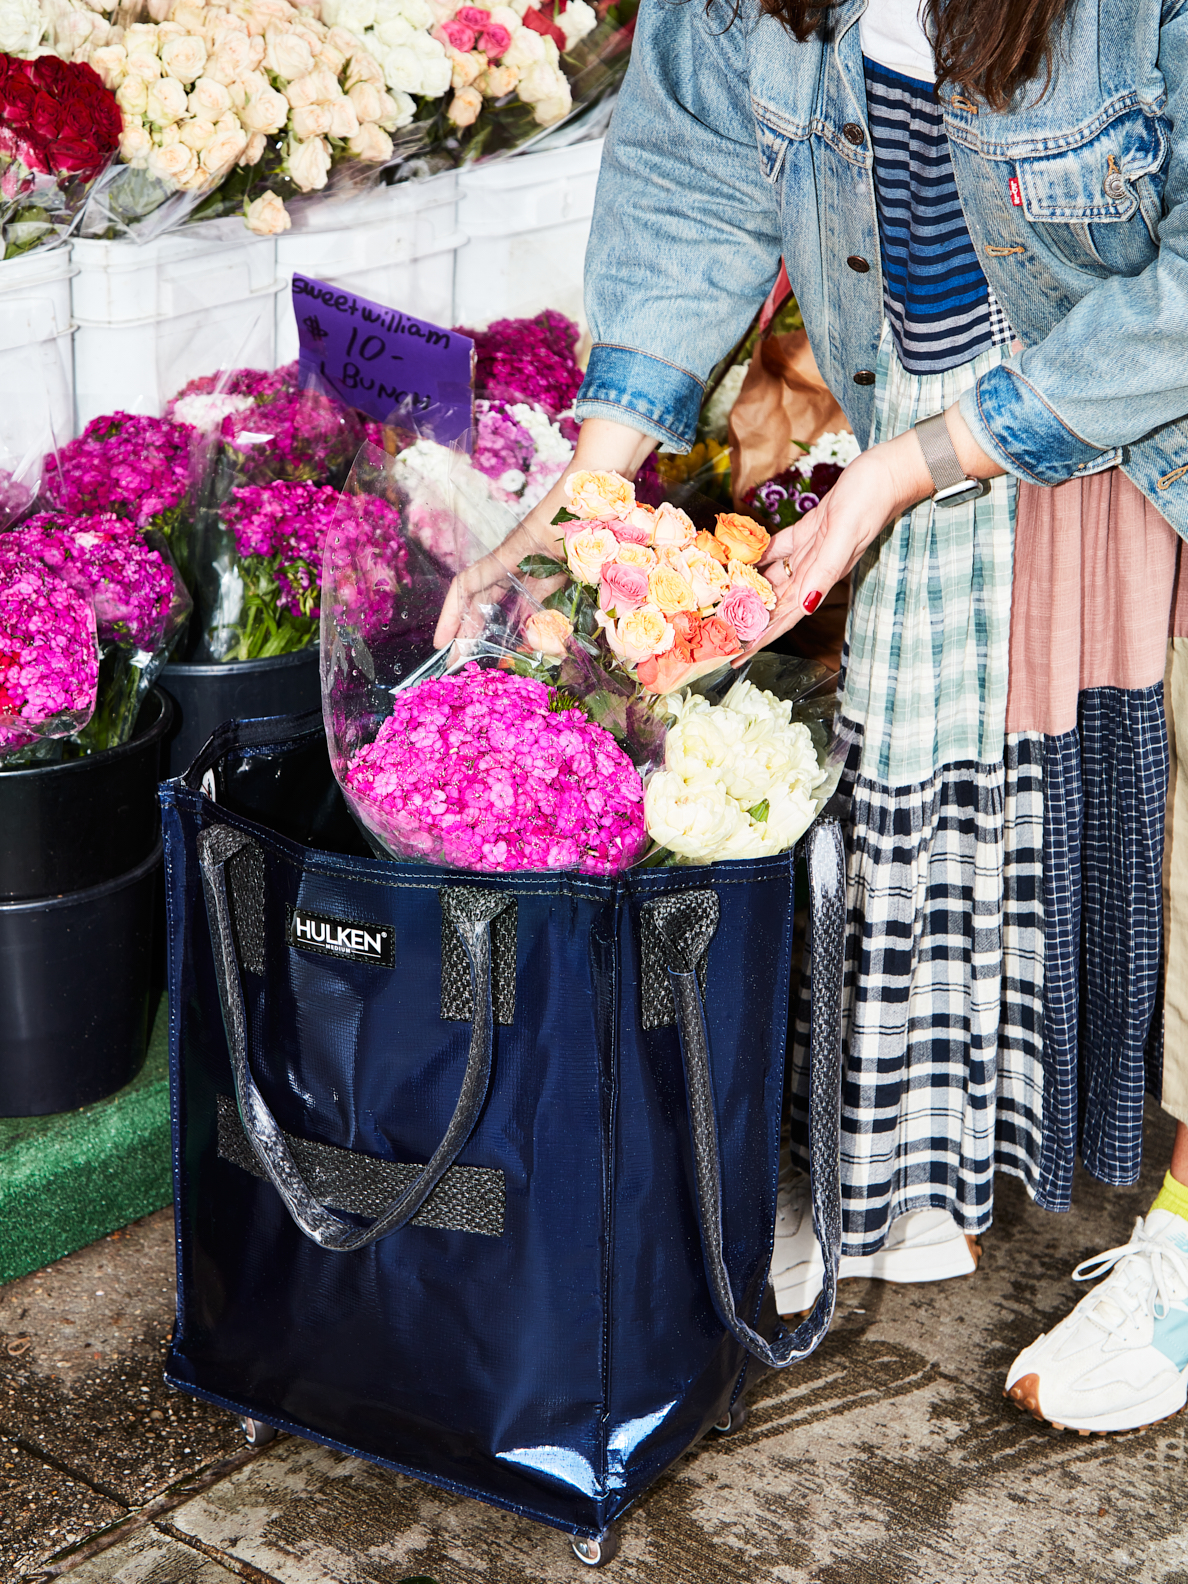 hulken tote bag with flowers